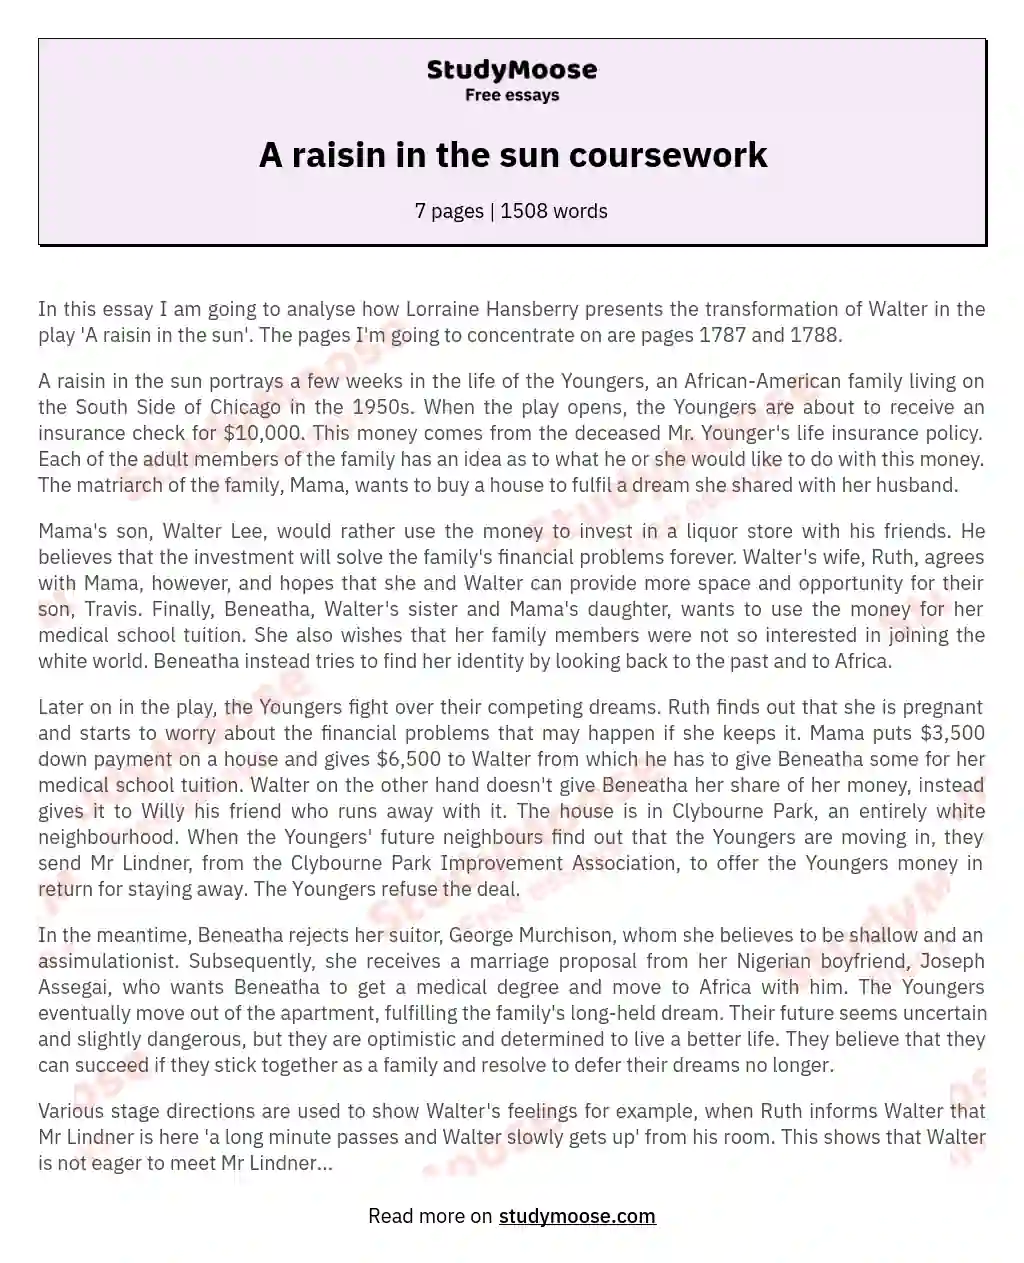 A raisin in the sun coursework essay